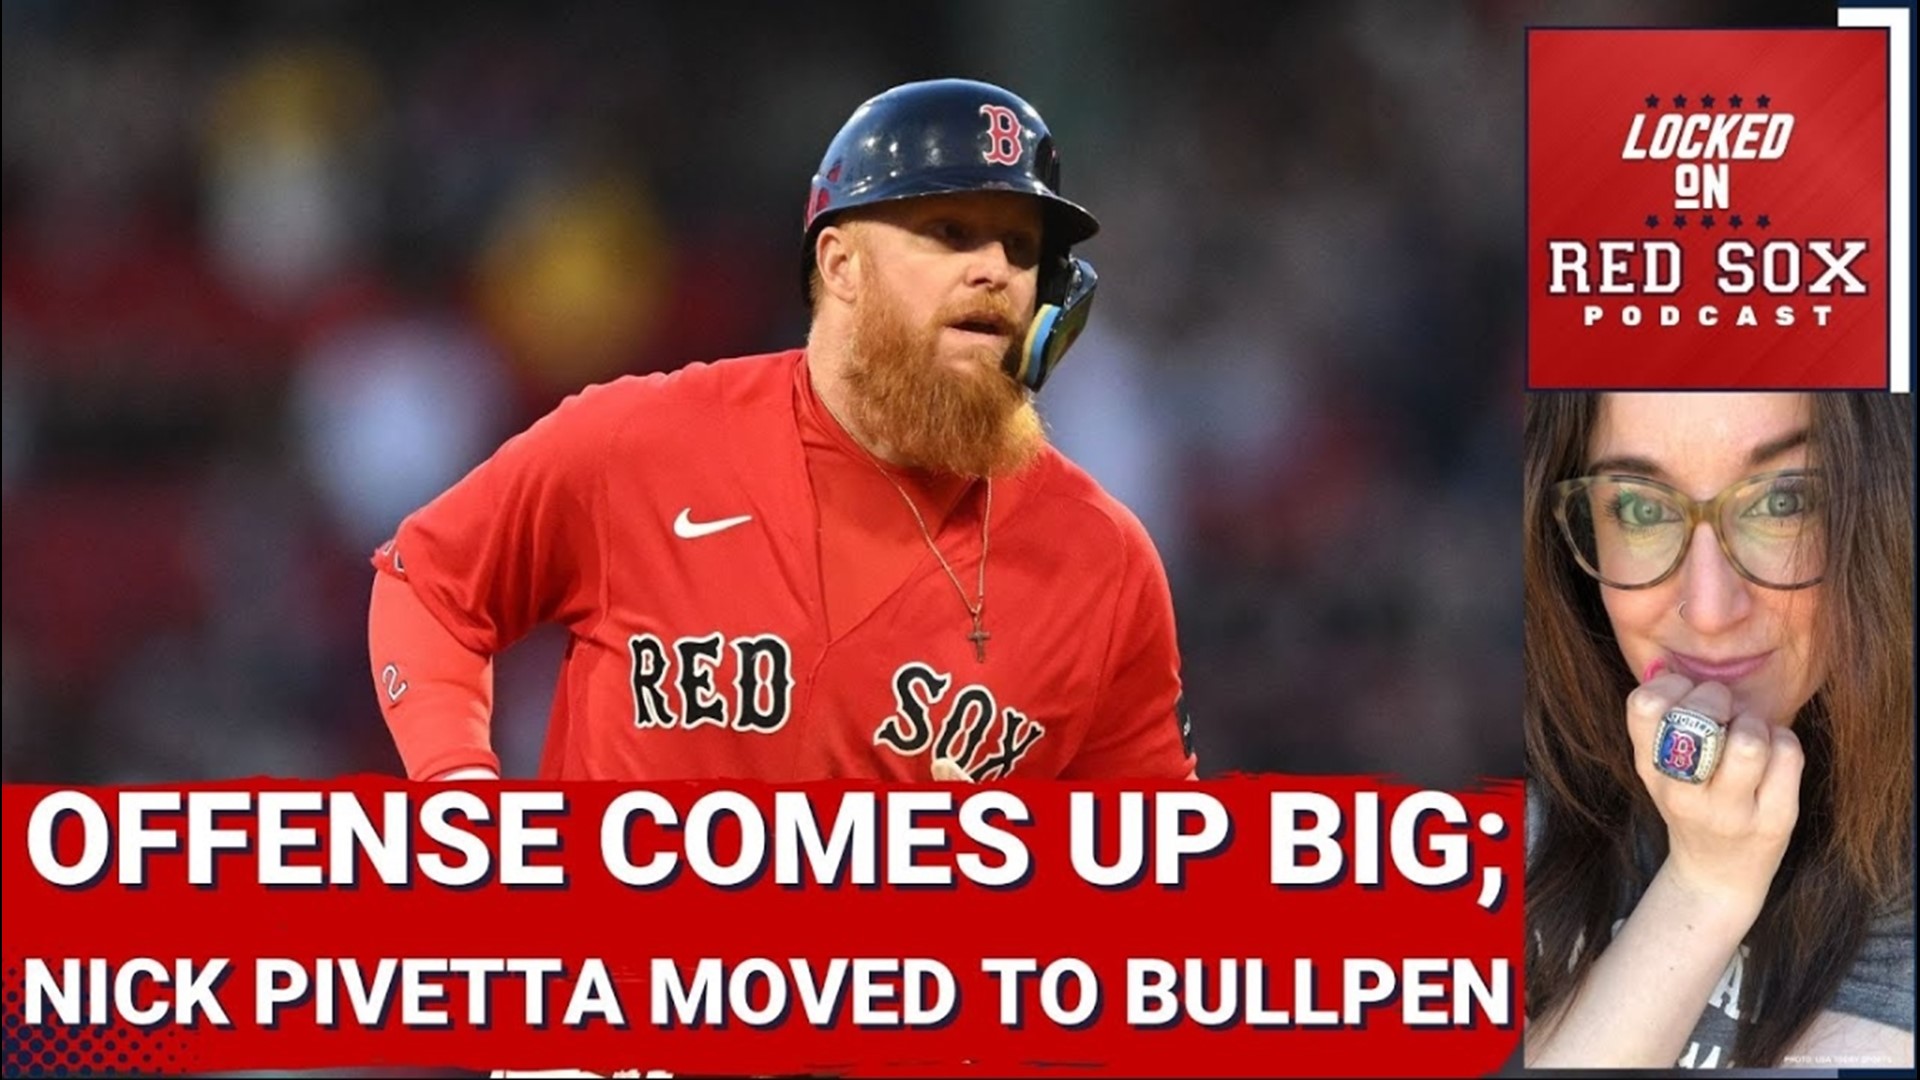 The Boston Red Sox move Nick Pivetta to the bullpen